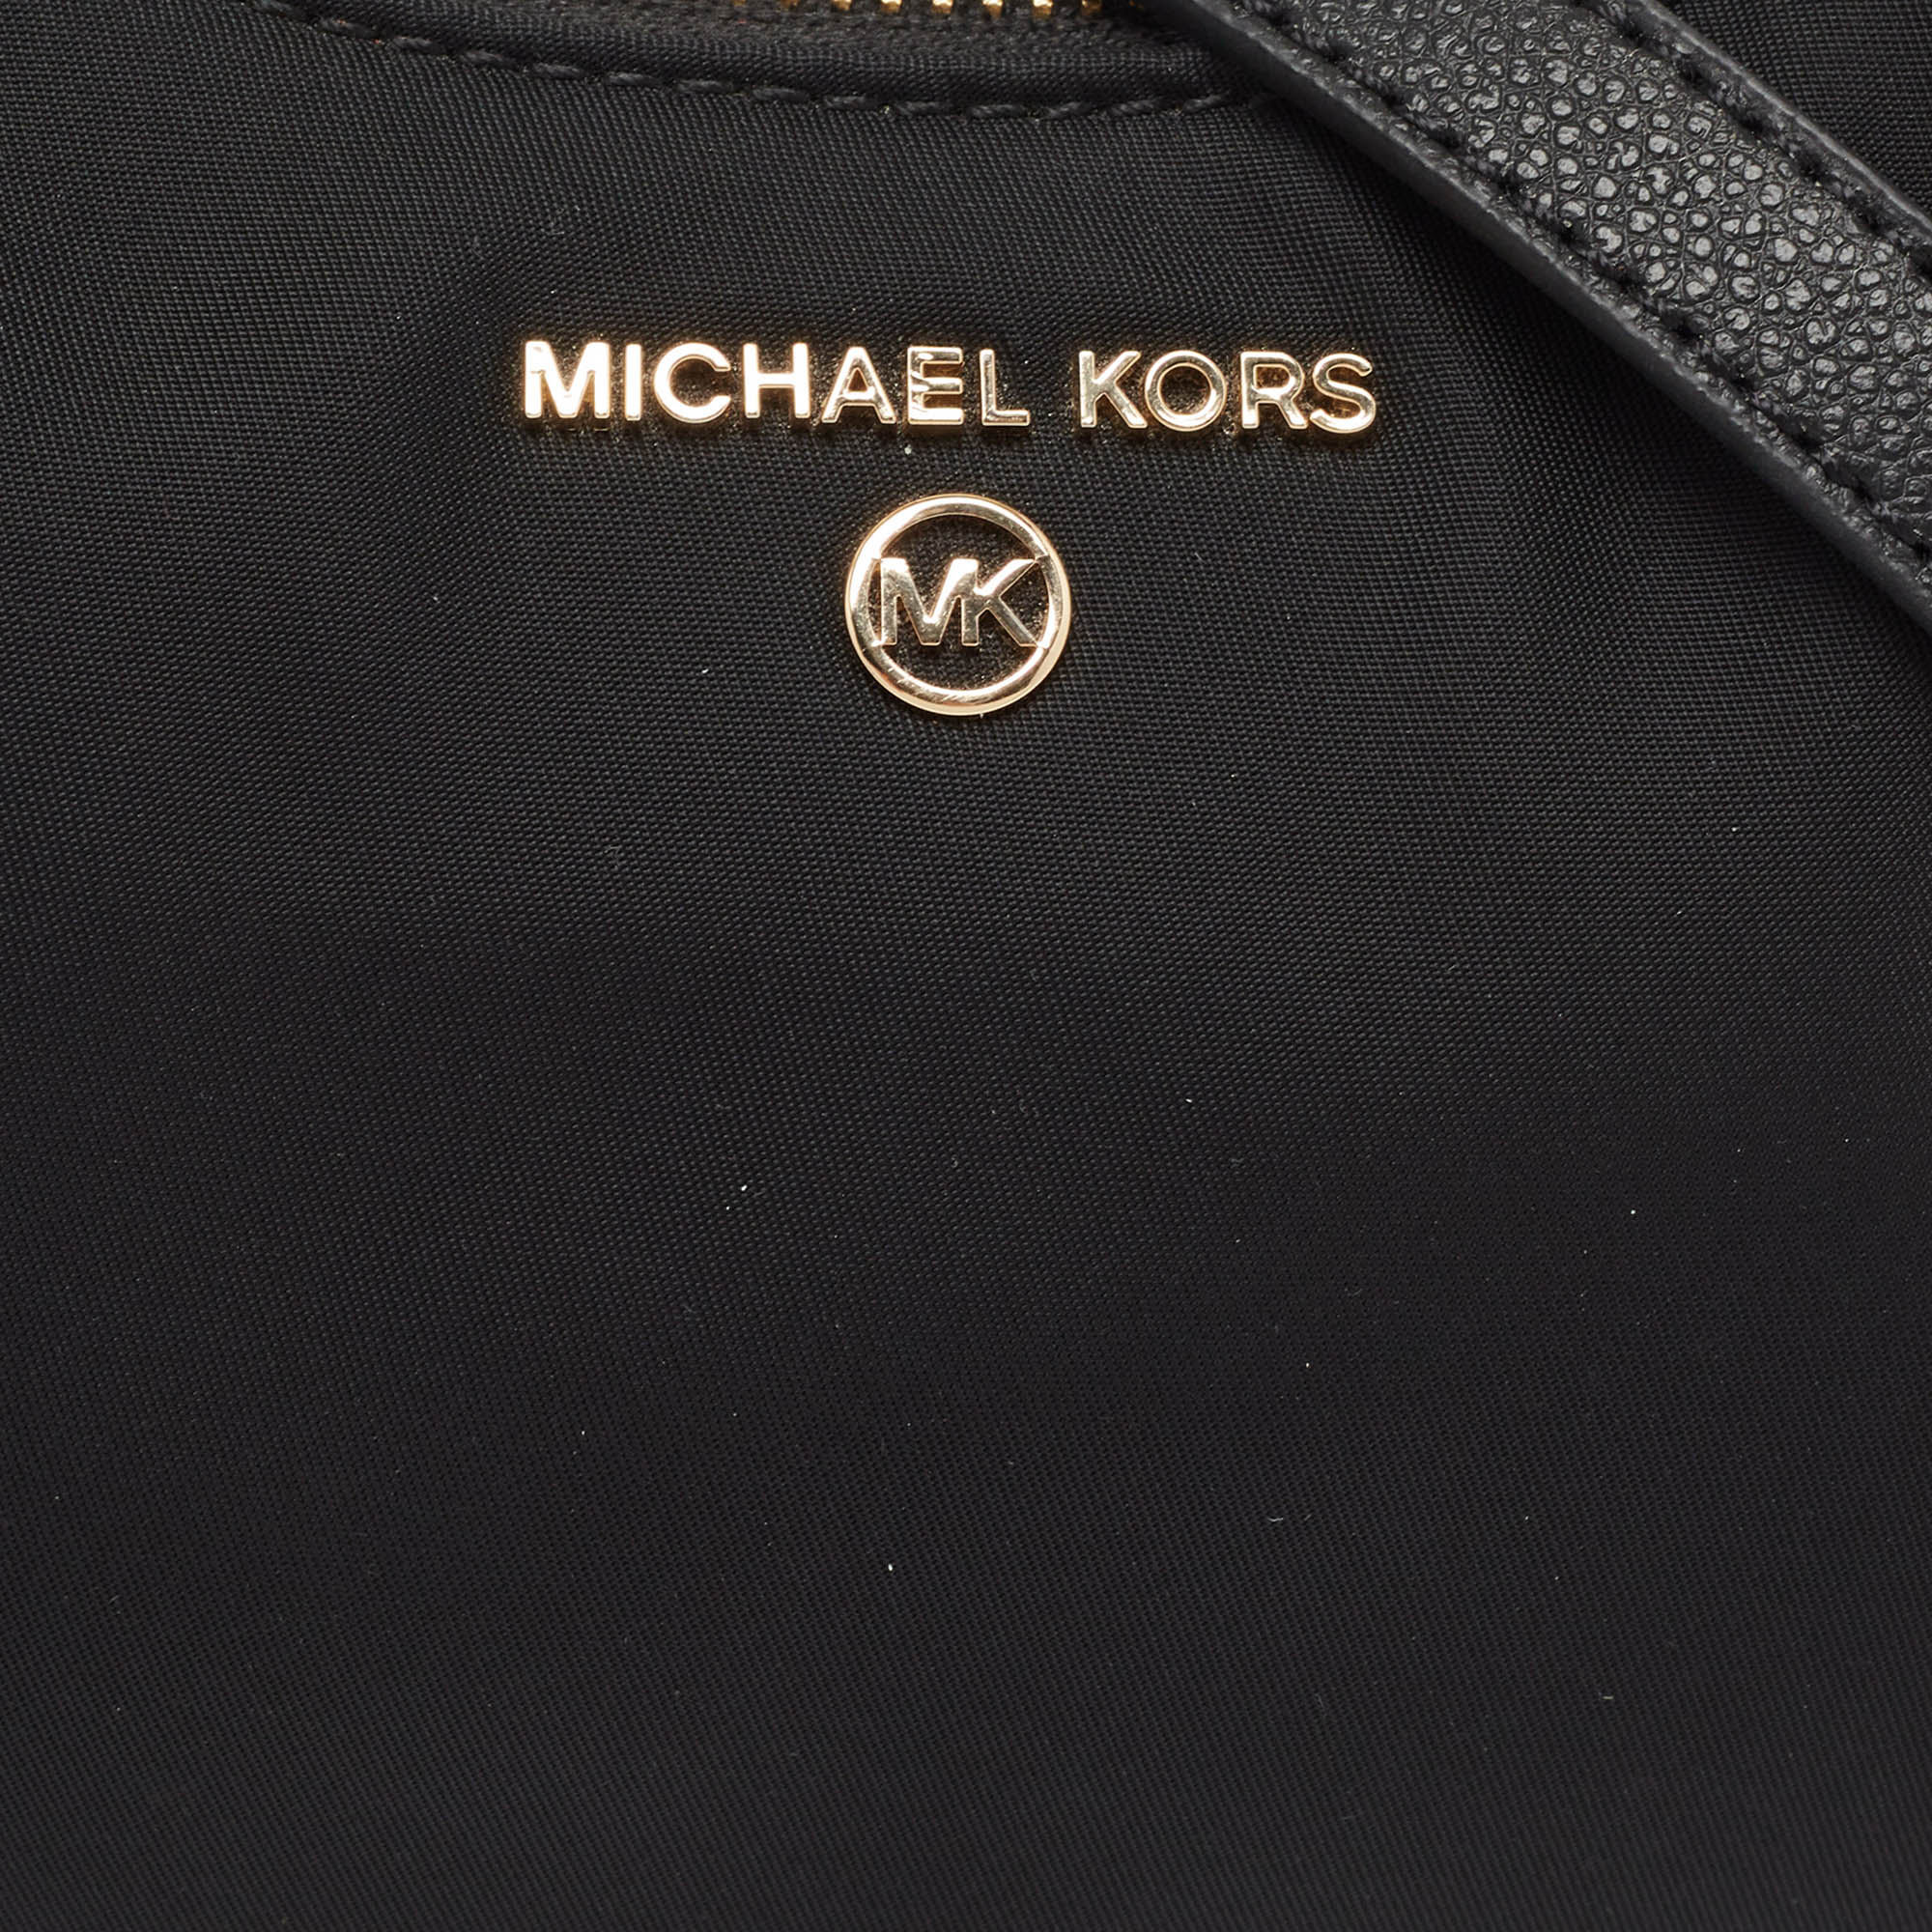 Michael Kors Black Nylon And Leather Chain Jet Set Crossbody Bag